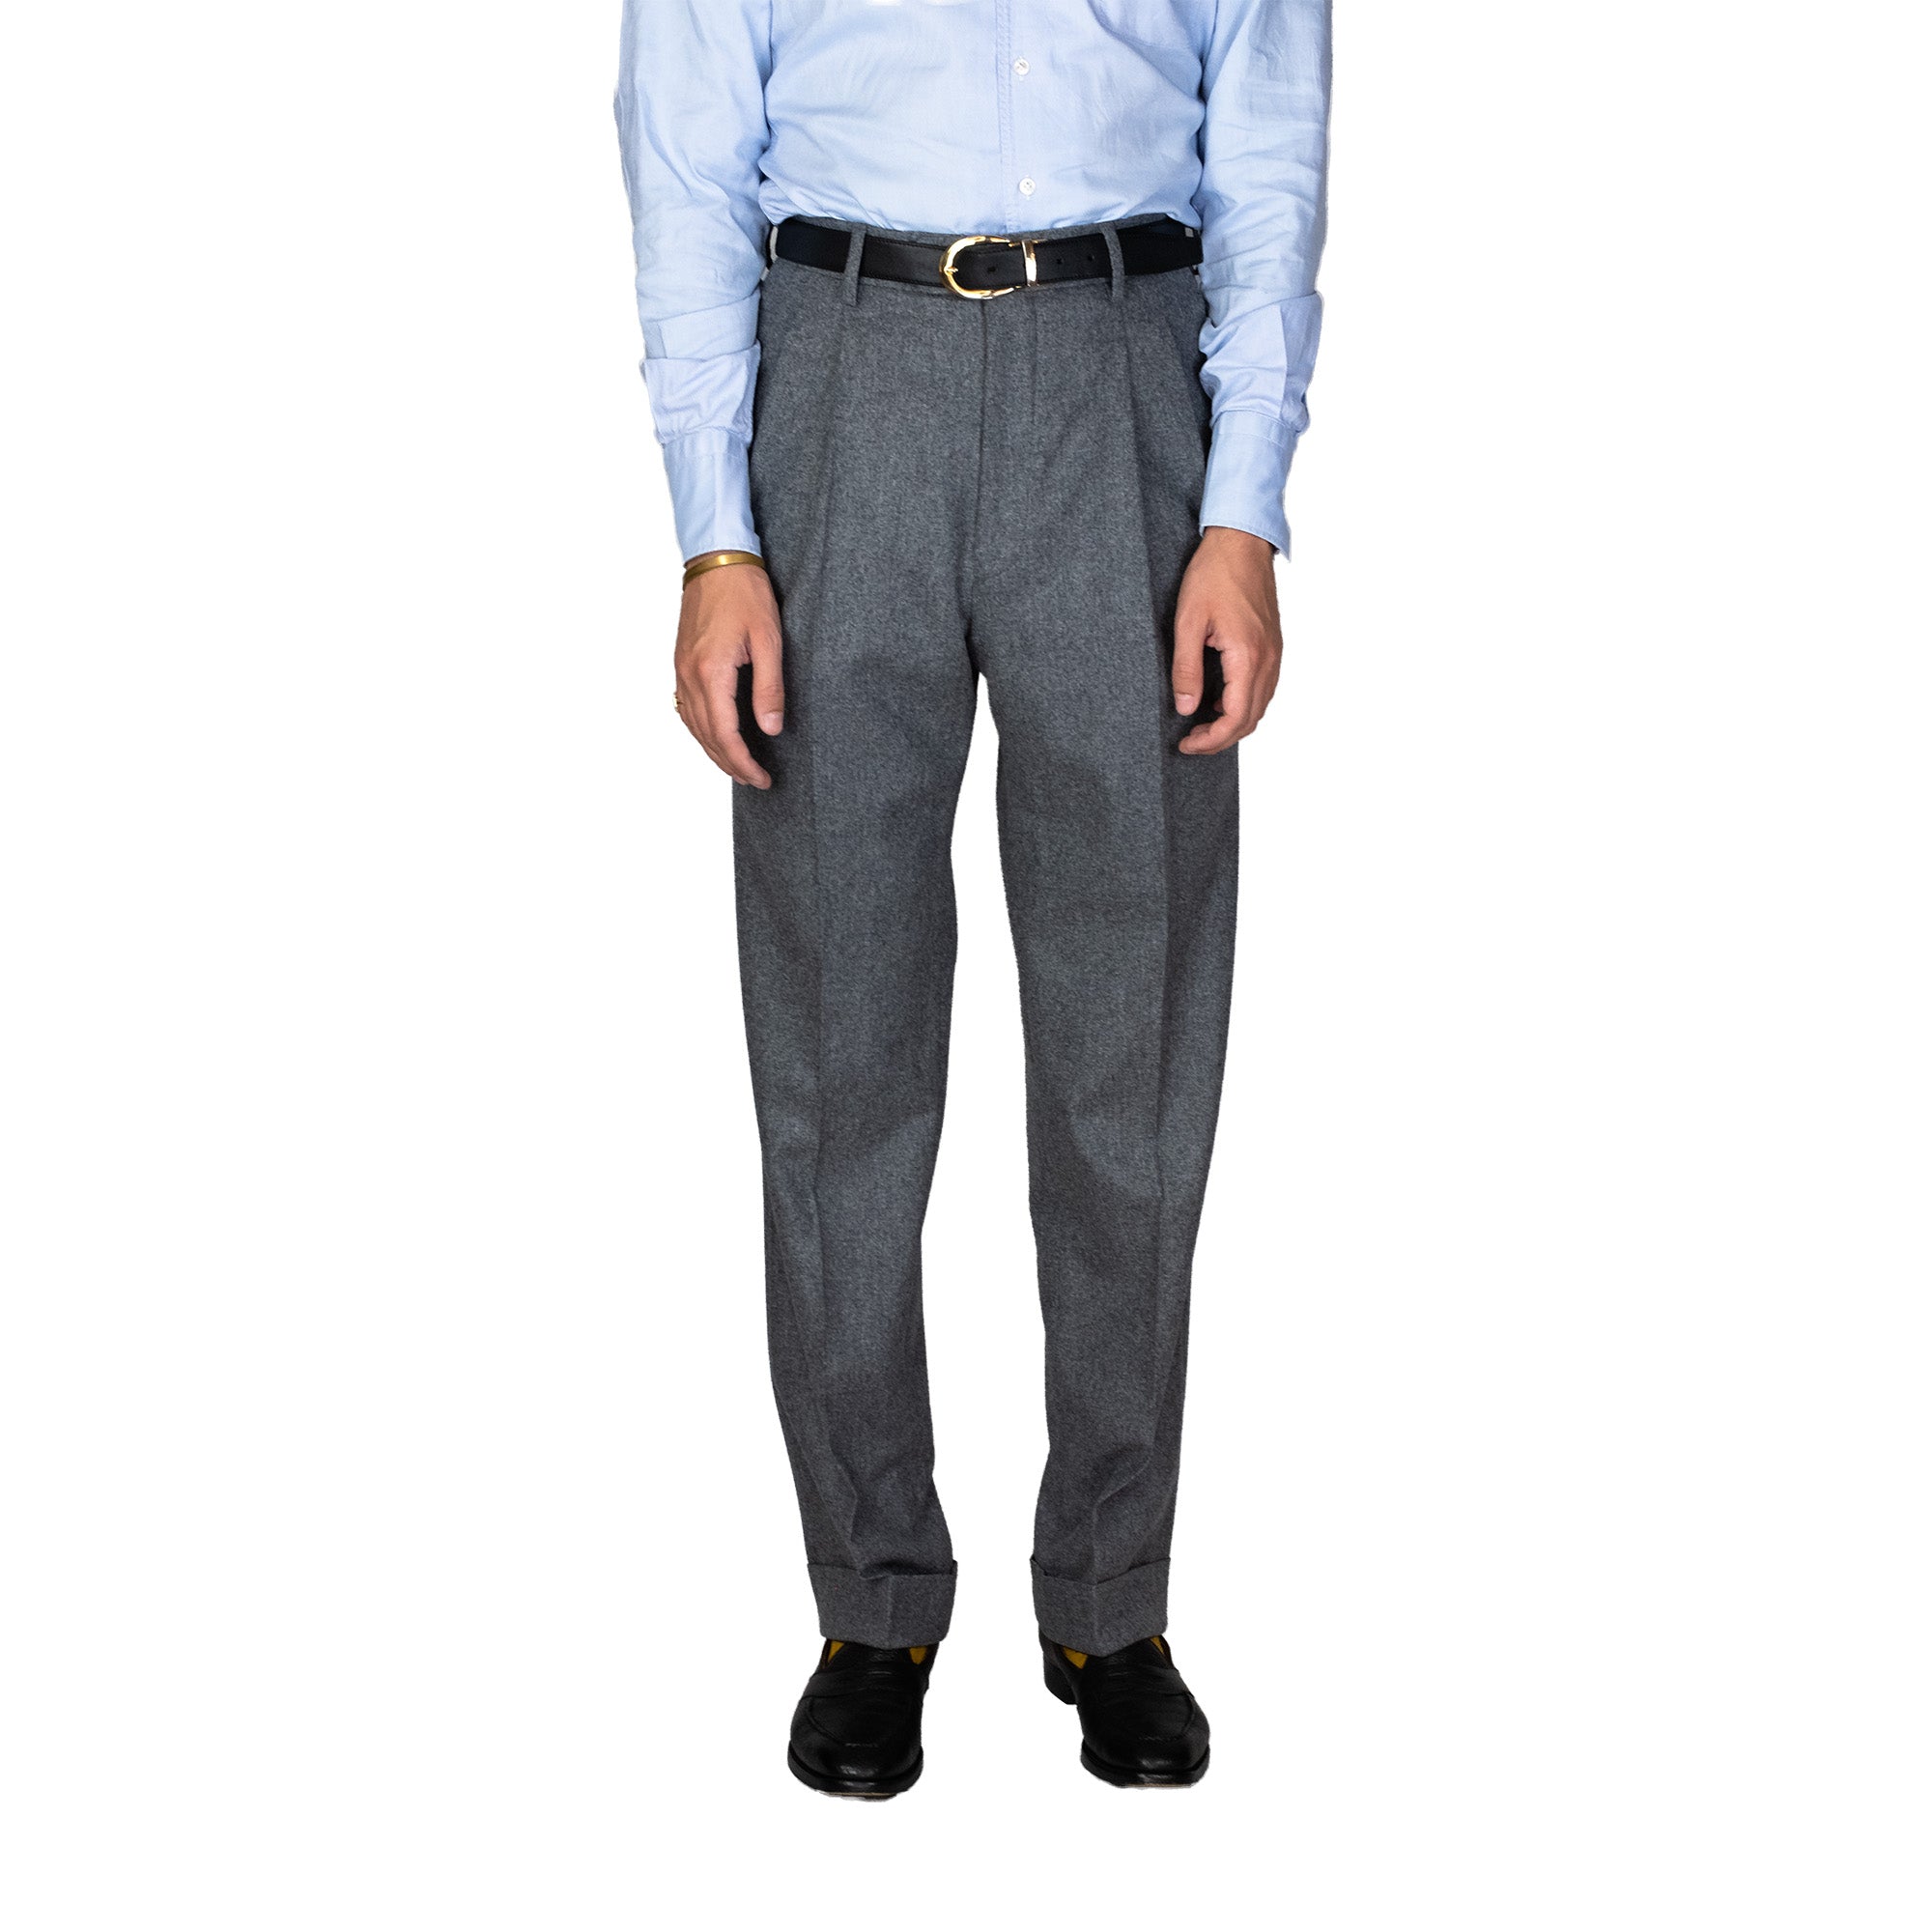 Pants - Mid grey flannel